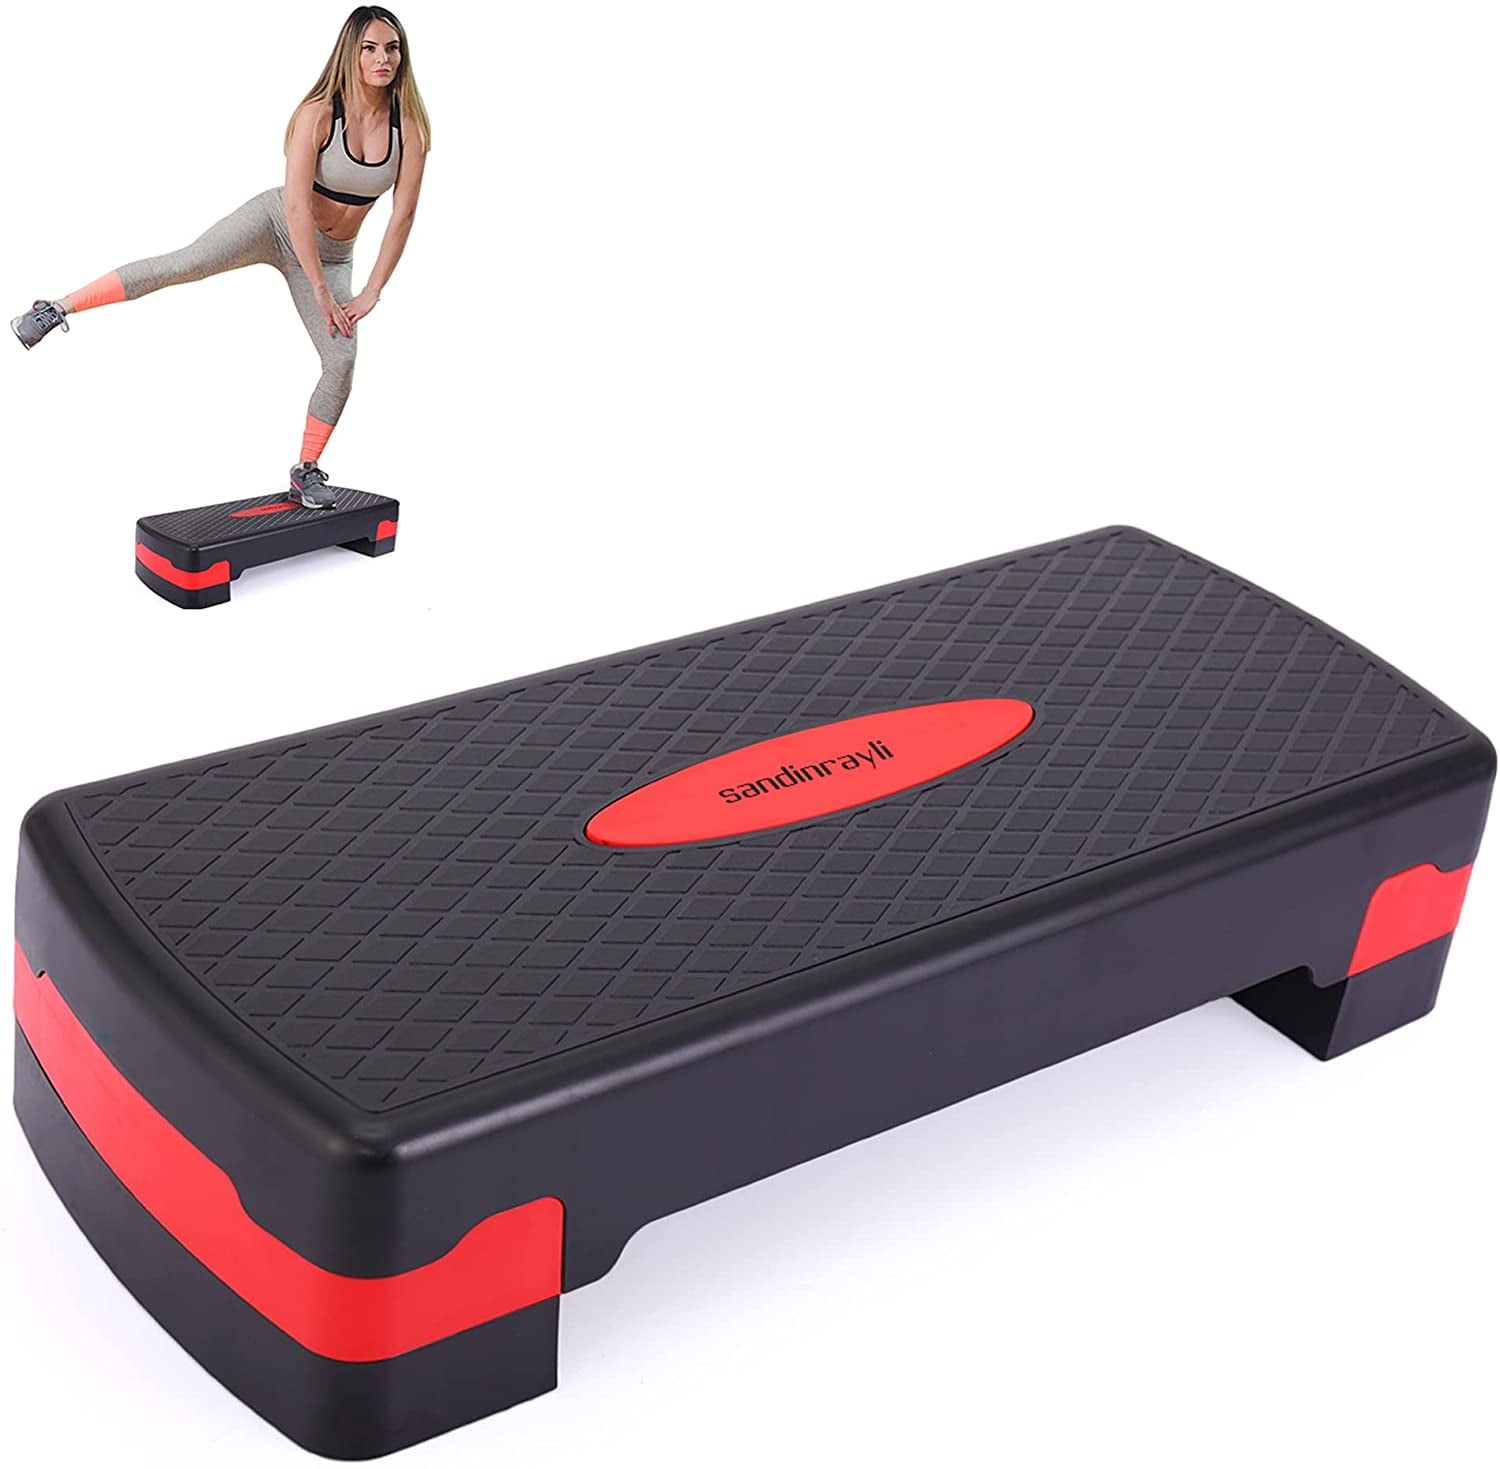 Adjustable Aerobic Stepper Yoga Exercise Cardio Training Home Gym Pilates Block 